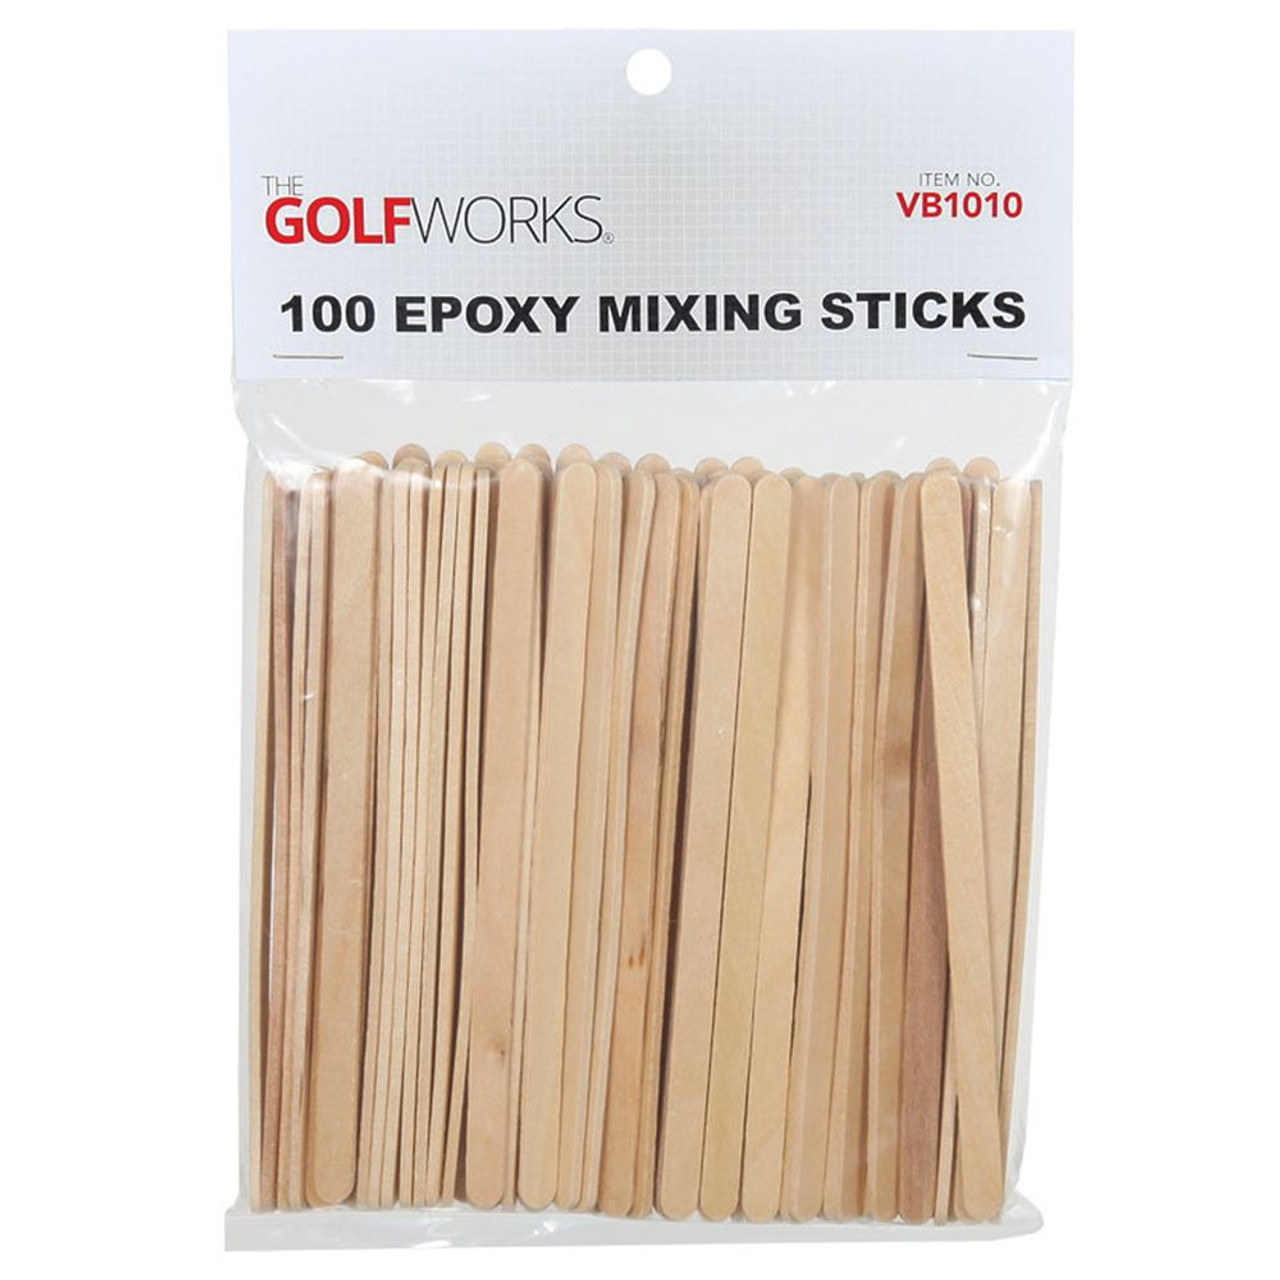 Mixing Sticks